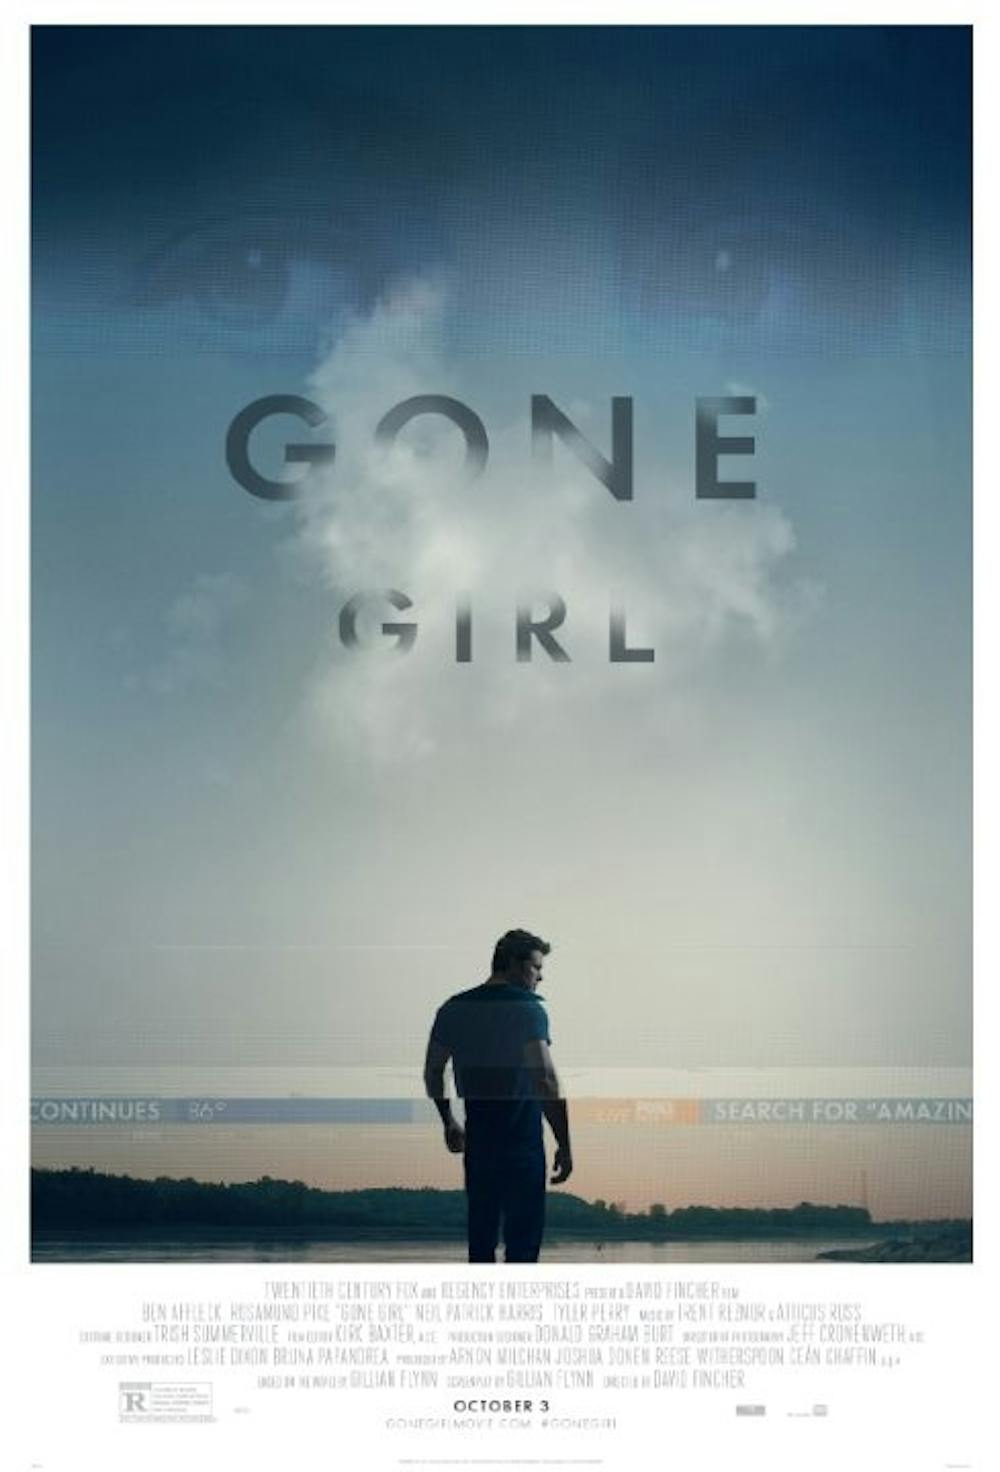 <p>Film adaption of Gillian Flynn's best selling novel "Gone Girl" delivers memorable performances by Ben Affleck and Rosamund Pike. </p>